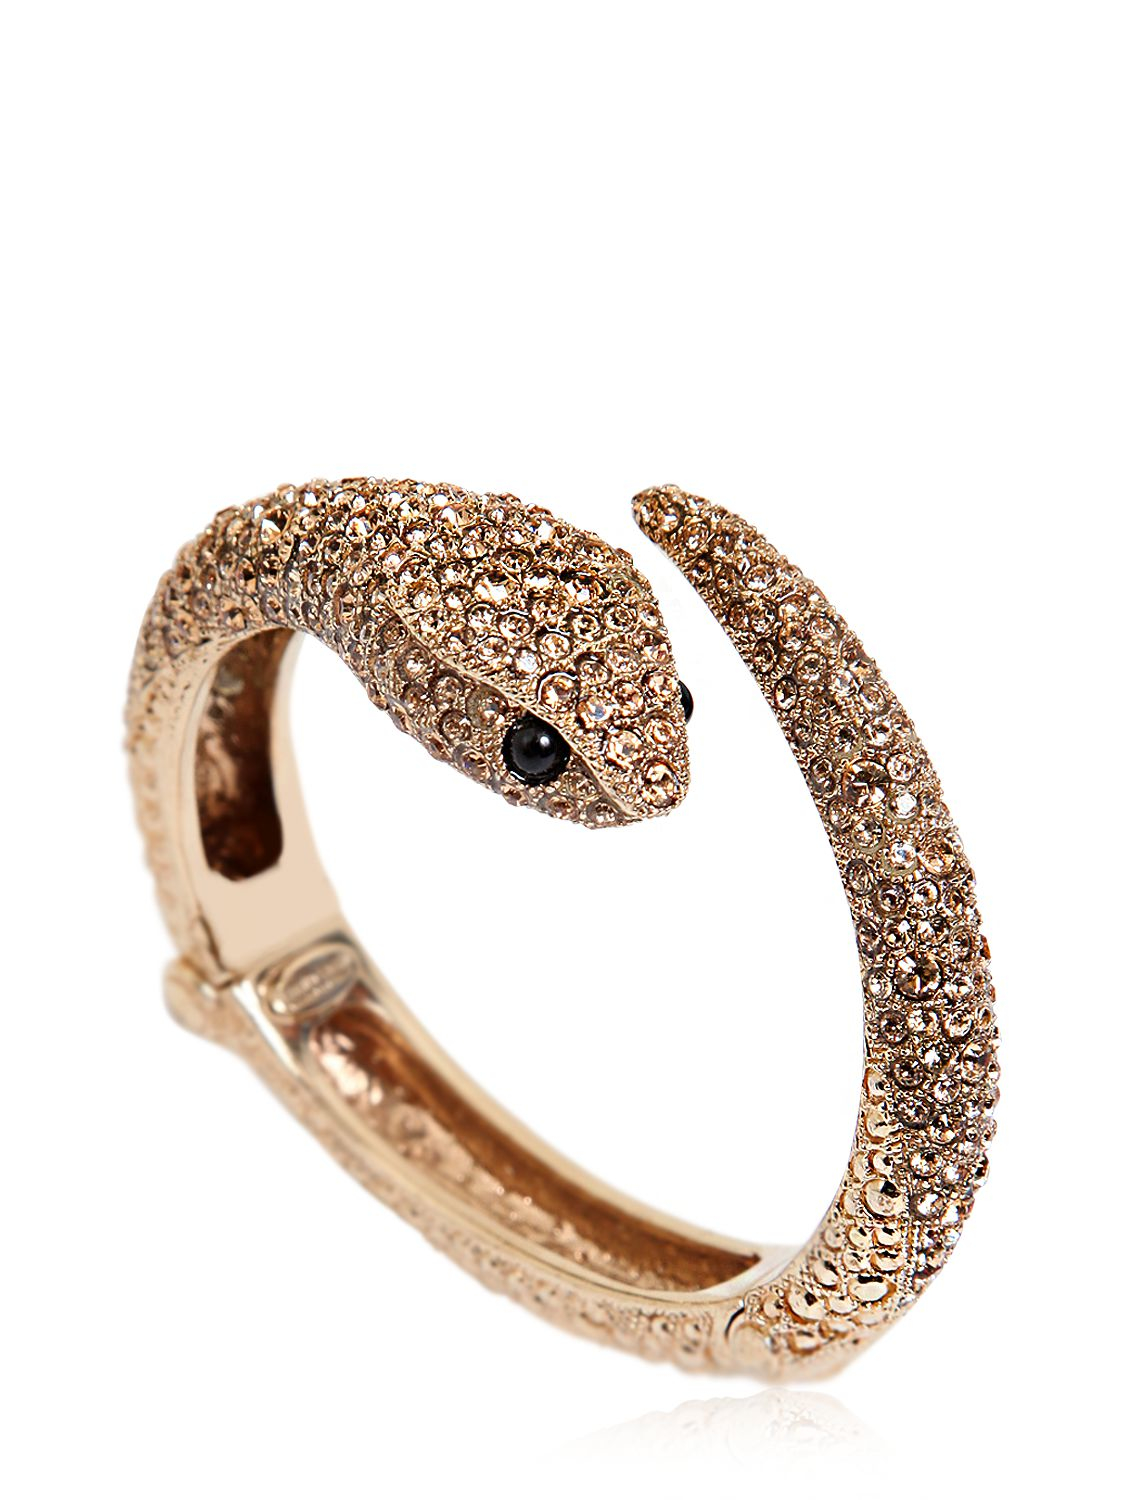 Roberto Cavalli Embellished Snake Bracelet in Metallic | Lyst